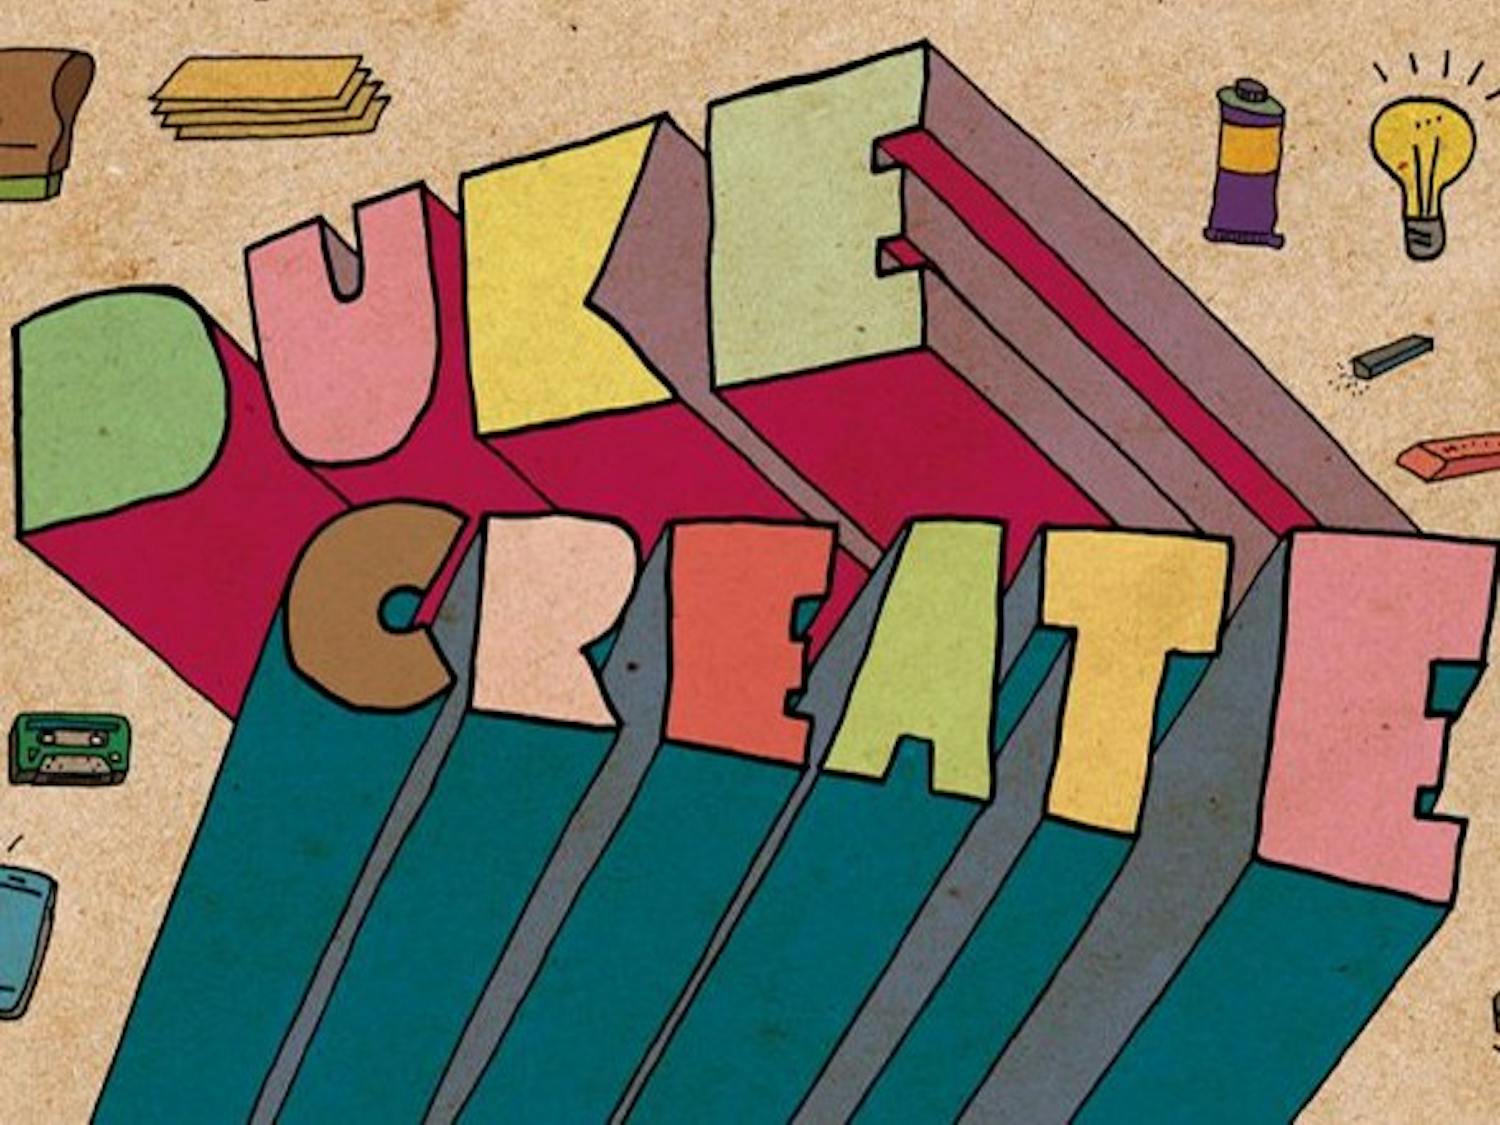 The DukeCreate program began in the Arts Annex in 2015.